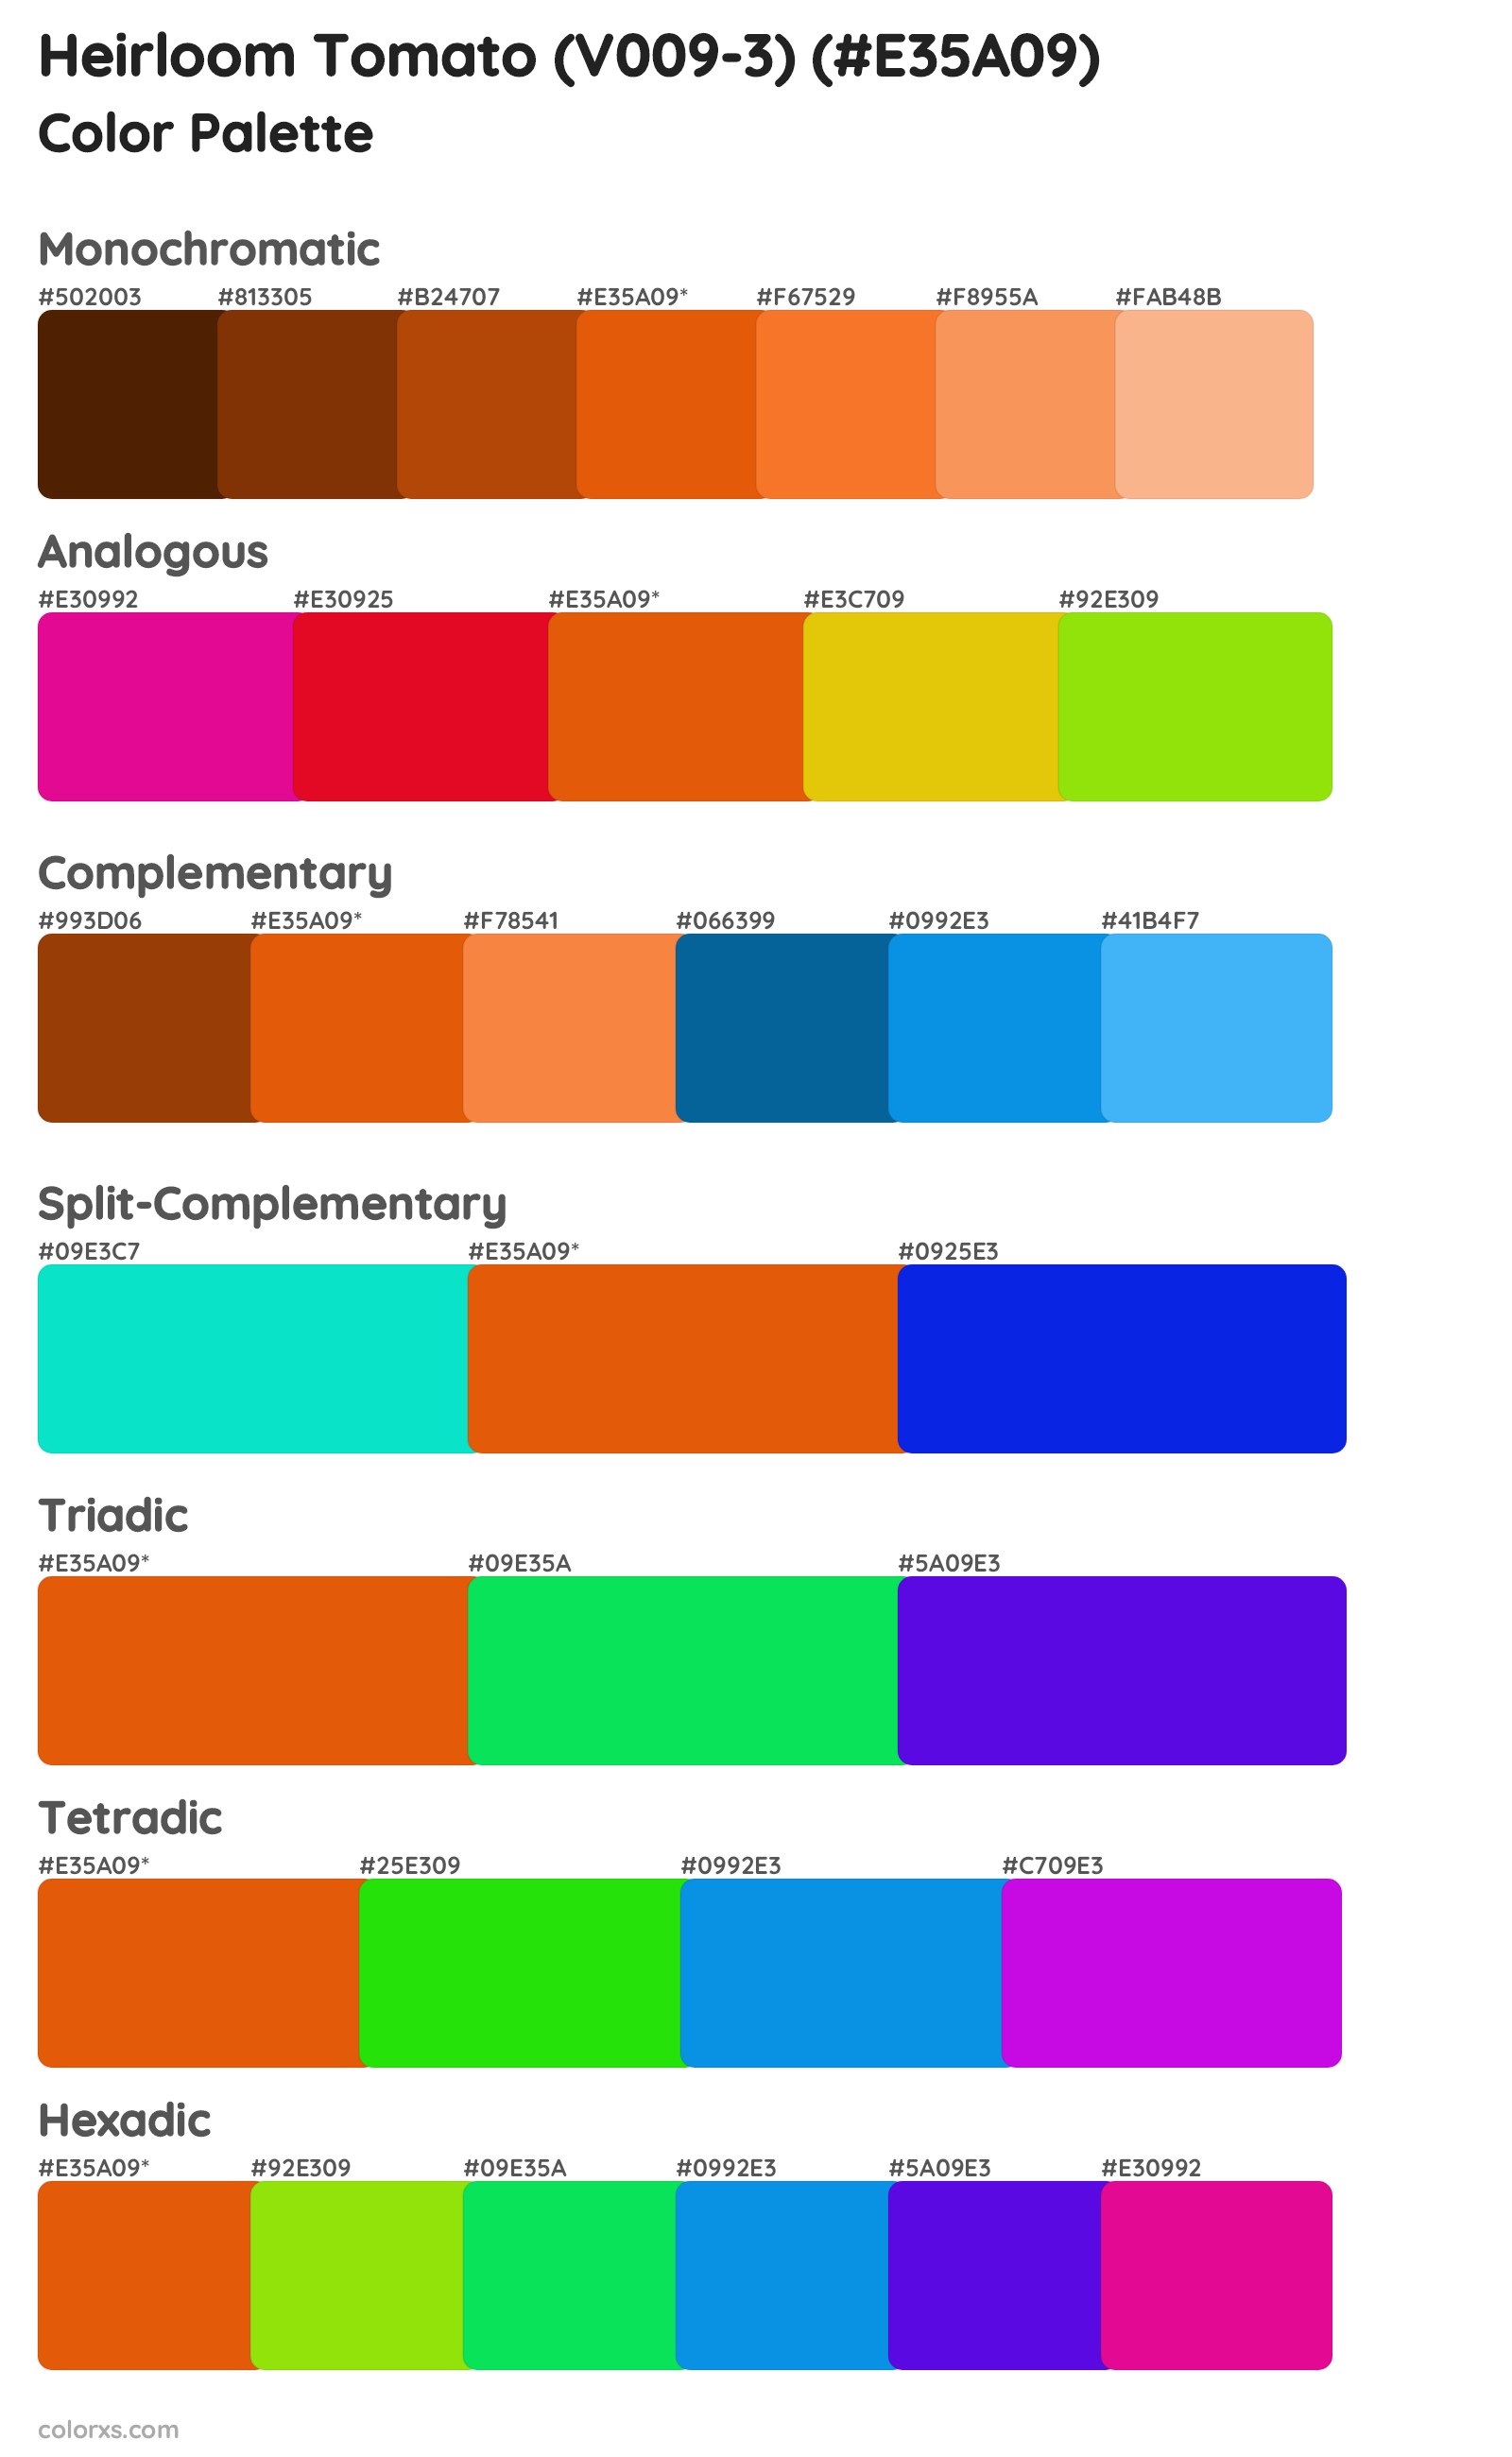 Heirloom Tomato (V009-3) Color Scheme Palettes